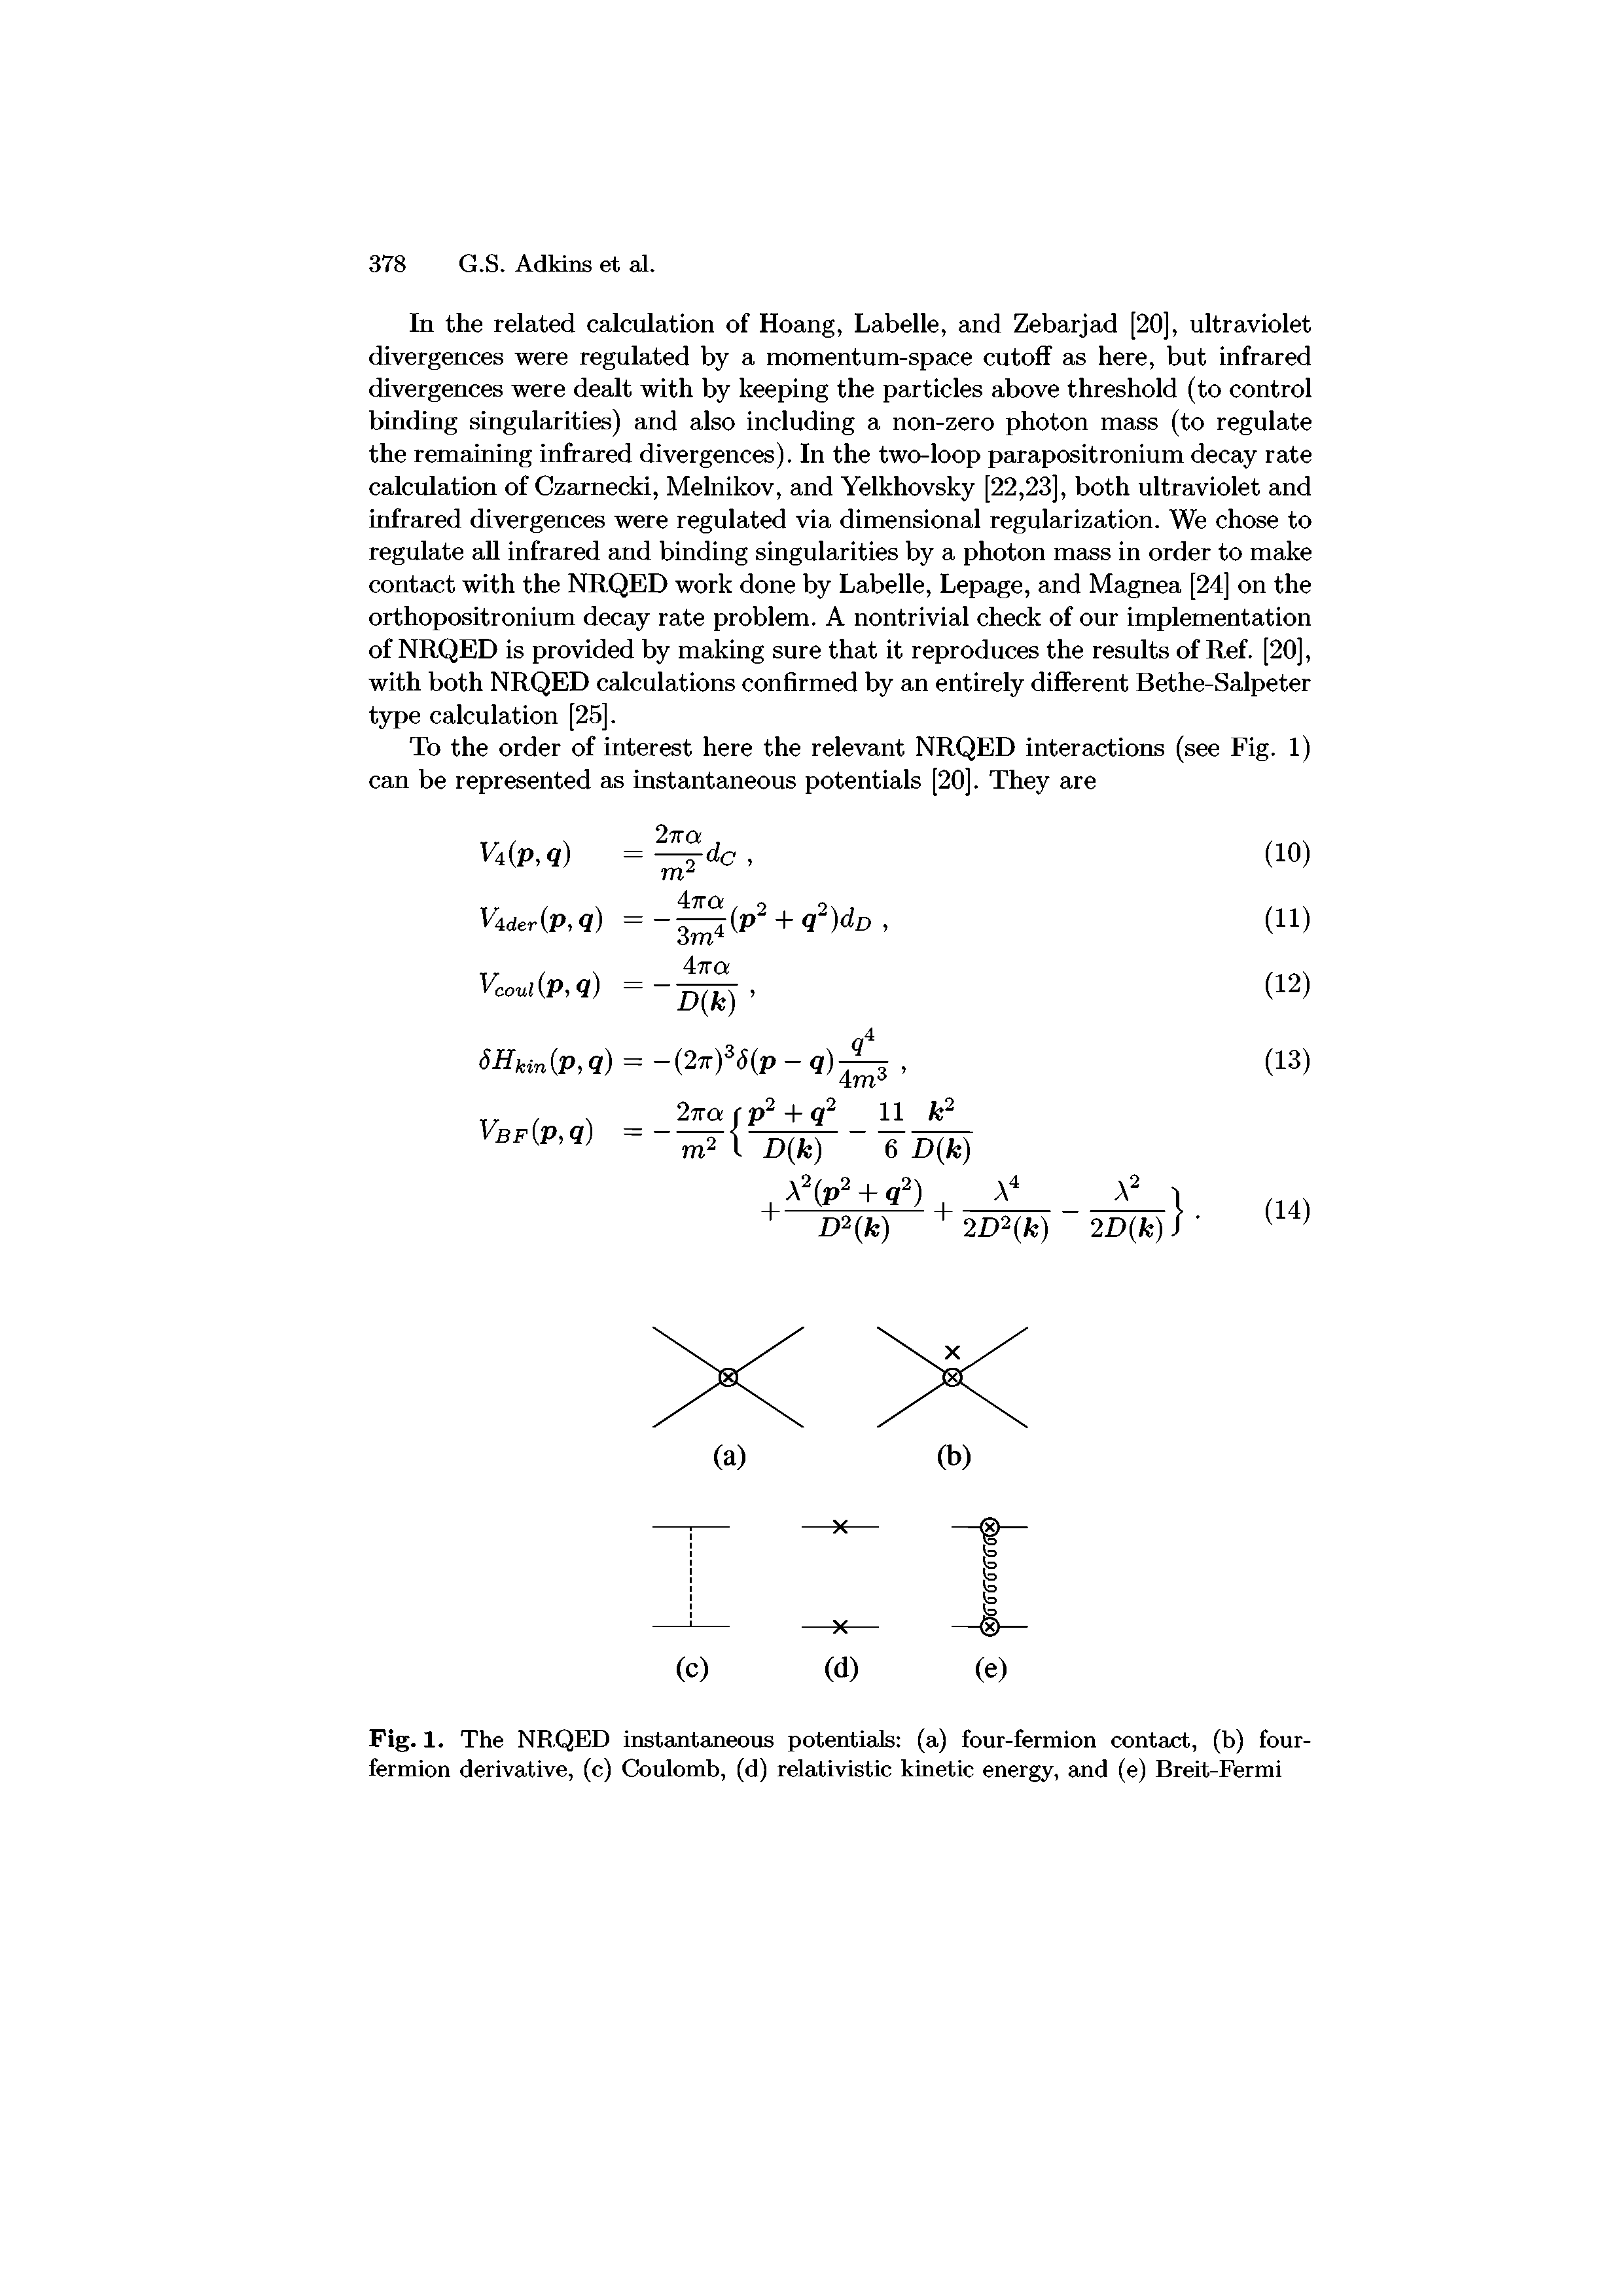 Fig. 1. The NRQED instantaneous potentials (a) four-fermion contact, (b) four-fermion derivative, (c) Coulomb, (d) relativistic kinetic energy, and (e) Breit-Fermi...